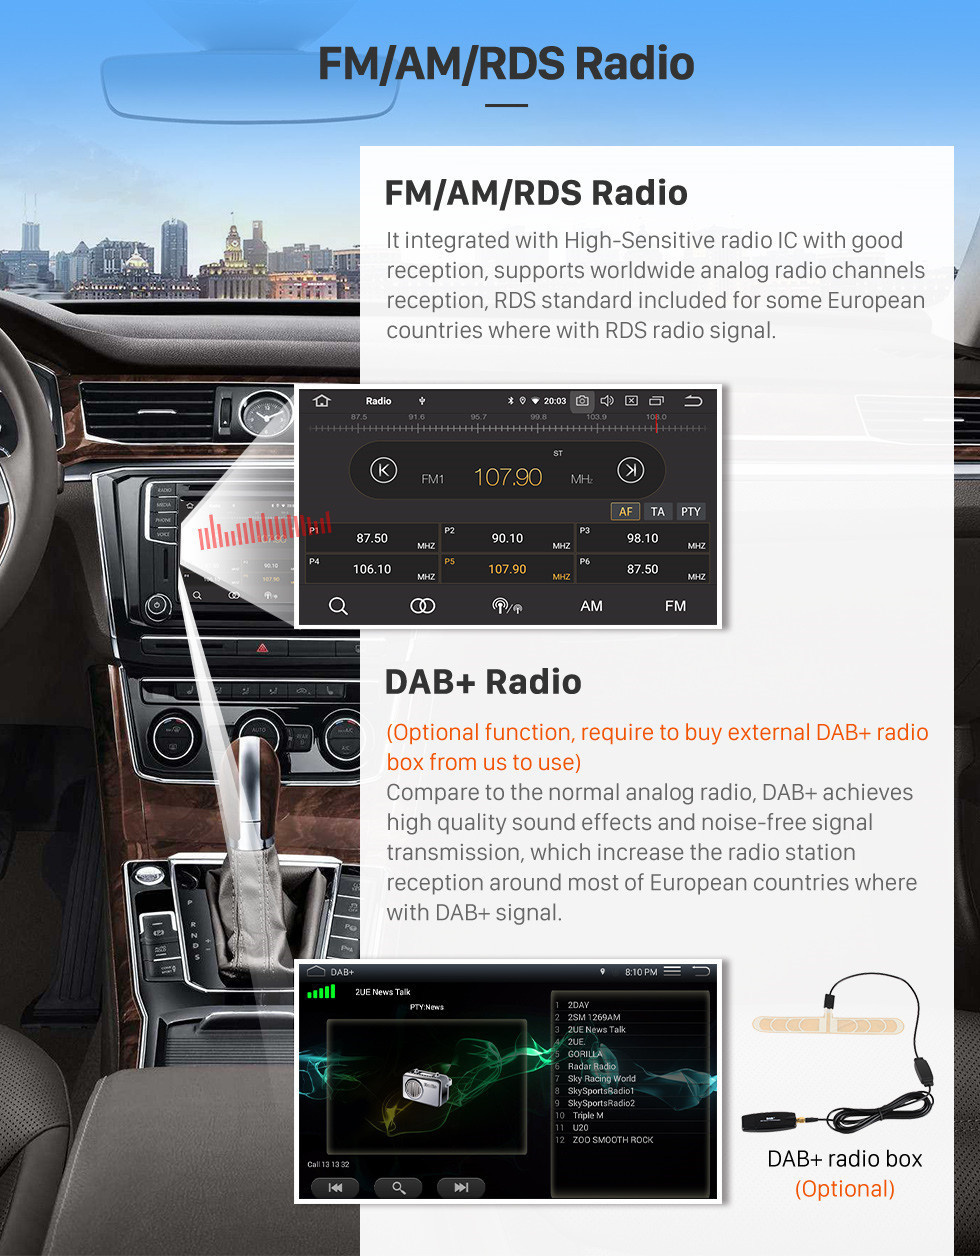 Seicane 2002-2008 Honda Jazz Manual AC Android 11.0 9 pulgadas Navegación GPS Radio Bluetooth HD Pantalla táctil Compatible con Carplay TV digital